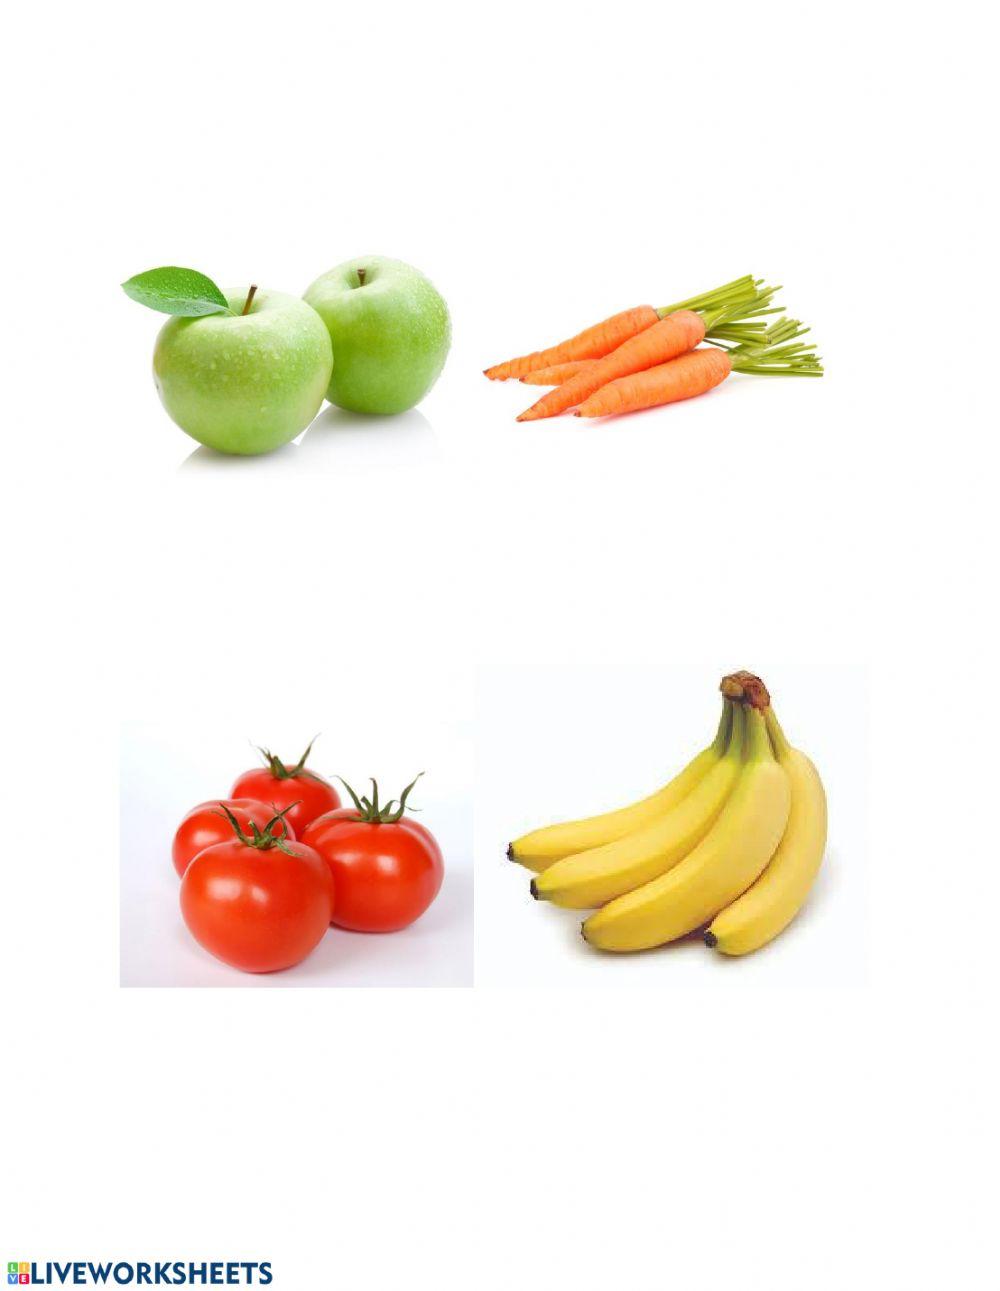 Obst, Gemüse